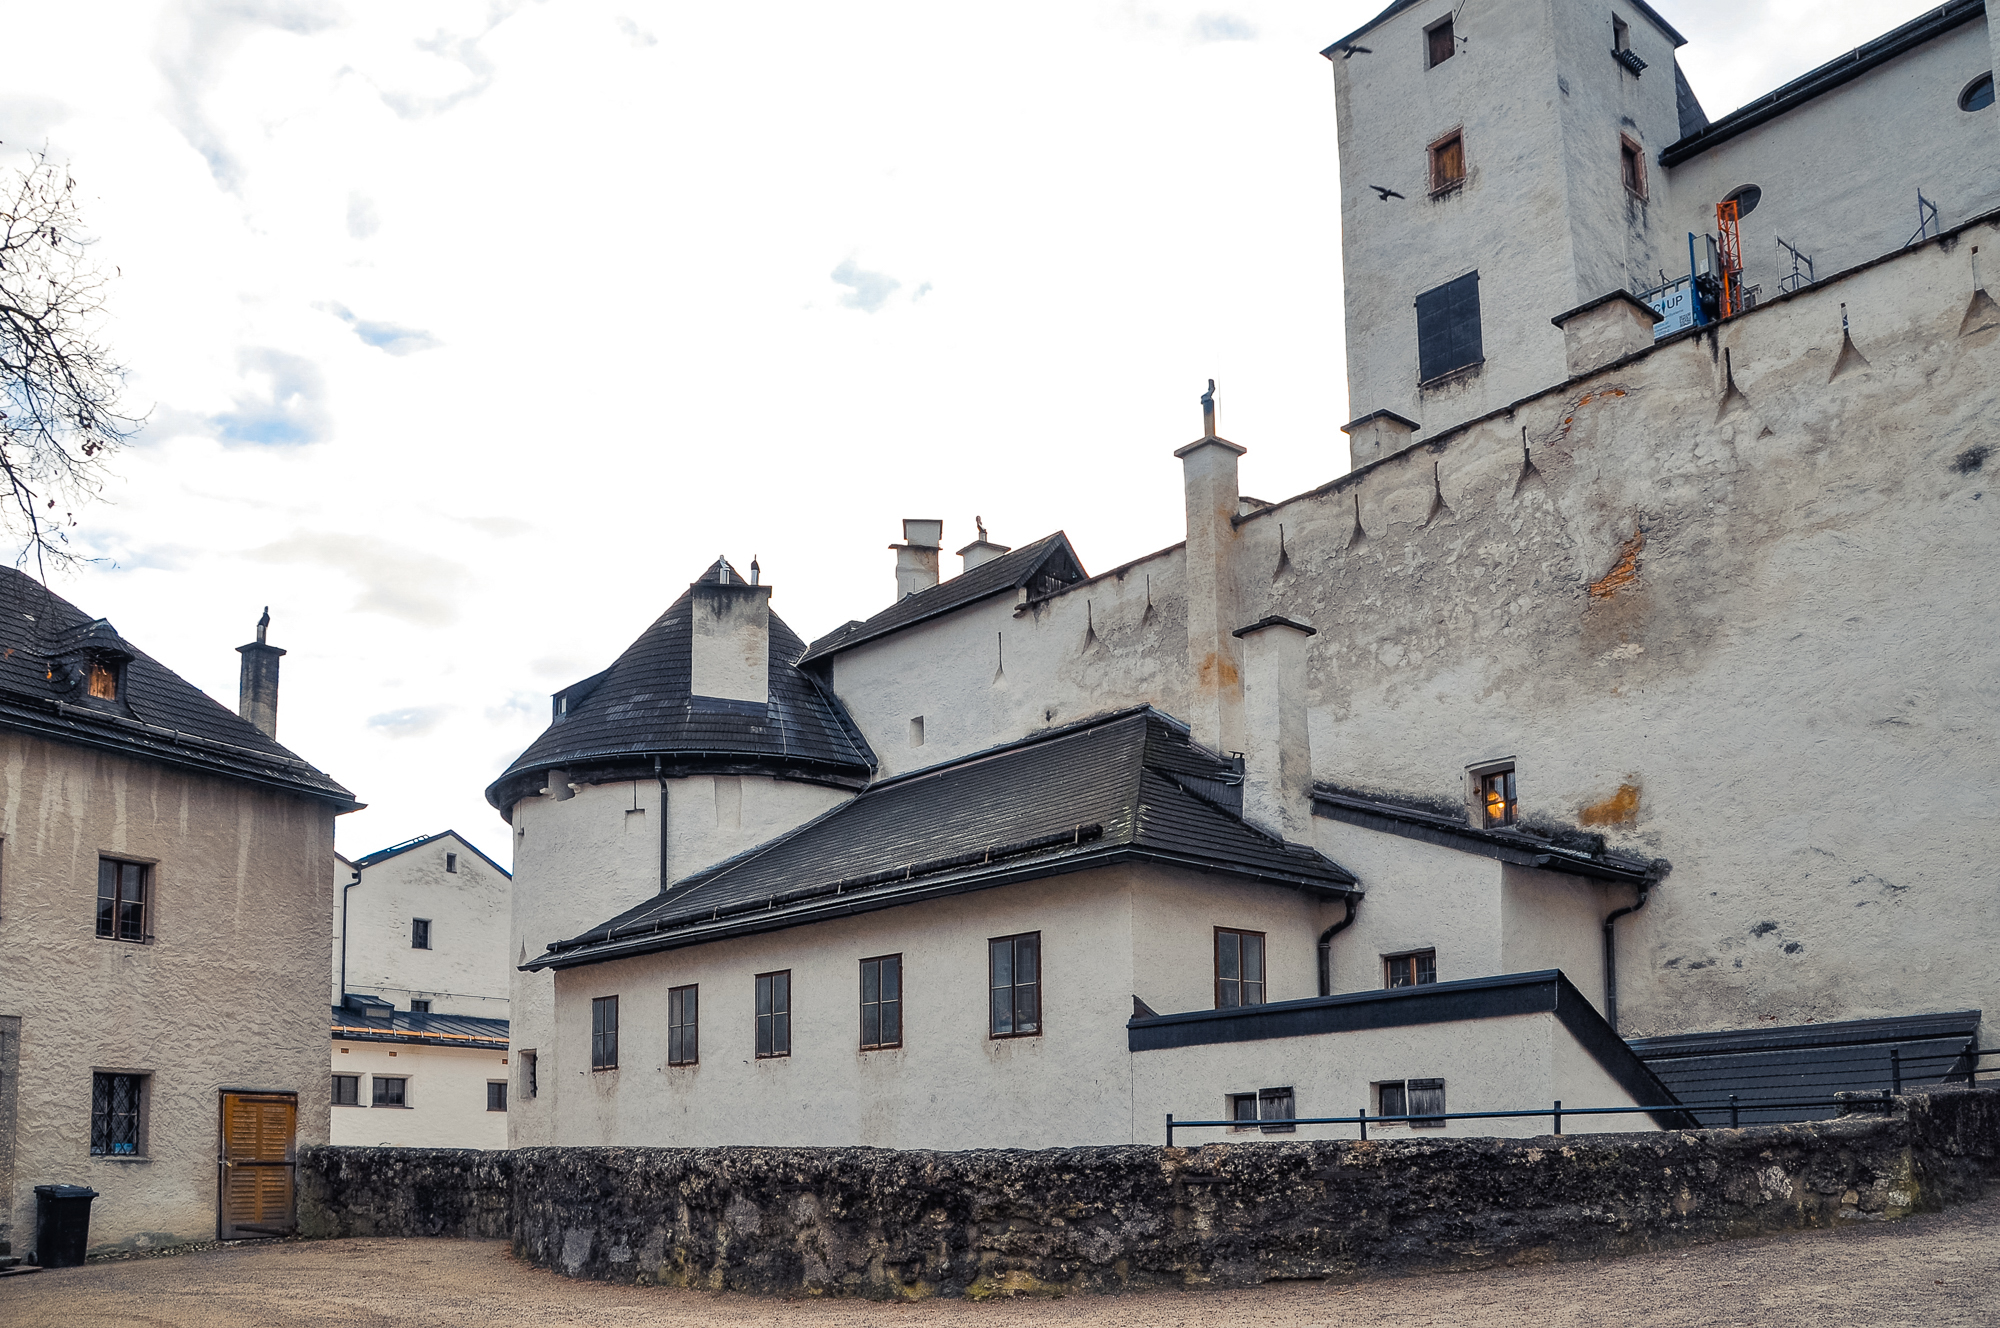  Festung Hohensalzburg